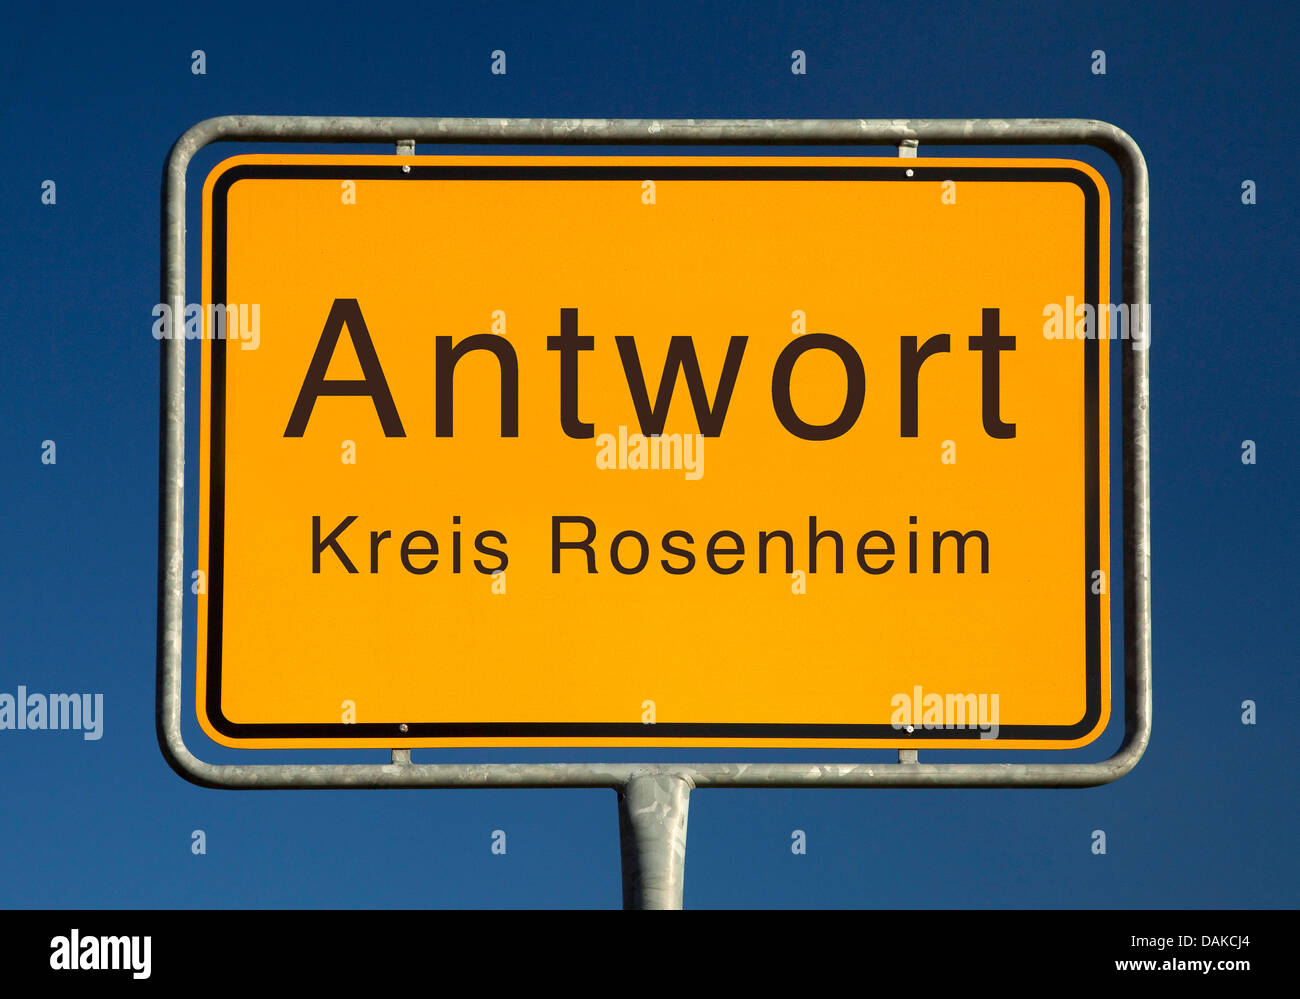 Antwort place name sign, Germany, Bavaria, Kreis Rosenheim, Antwort Stock Photo